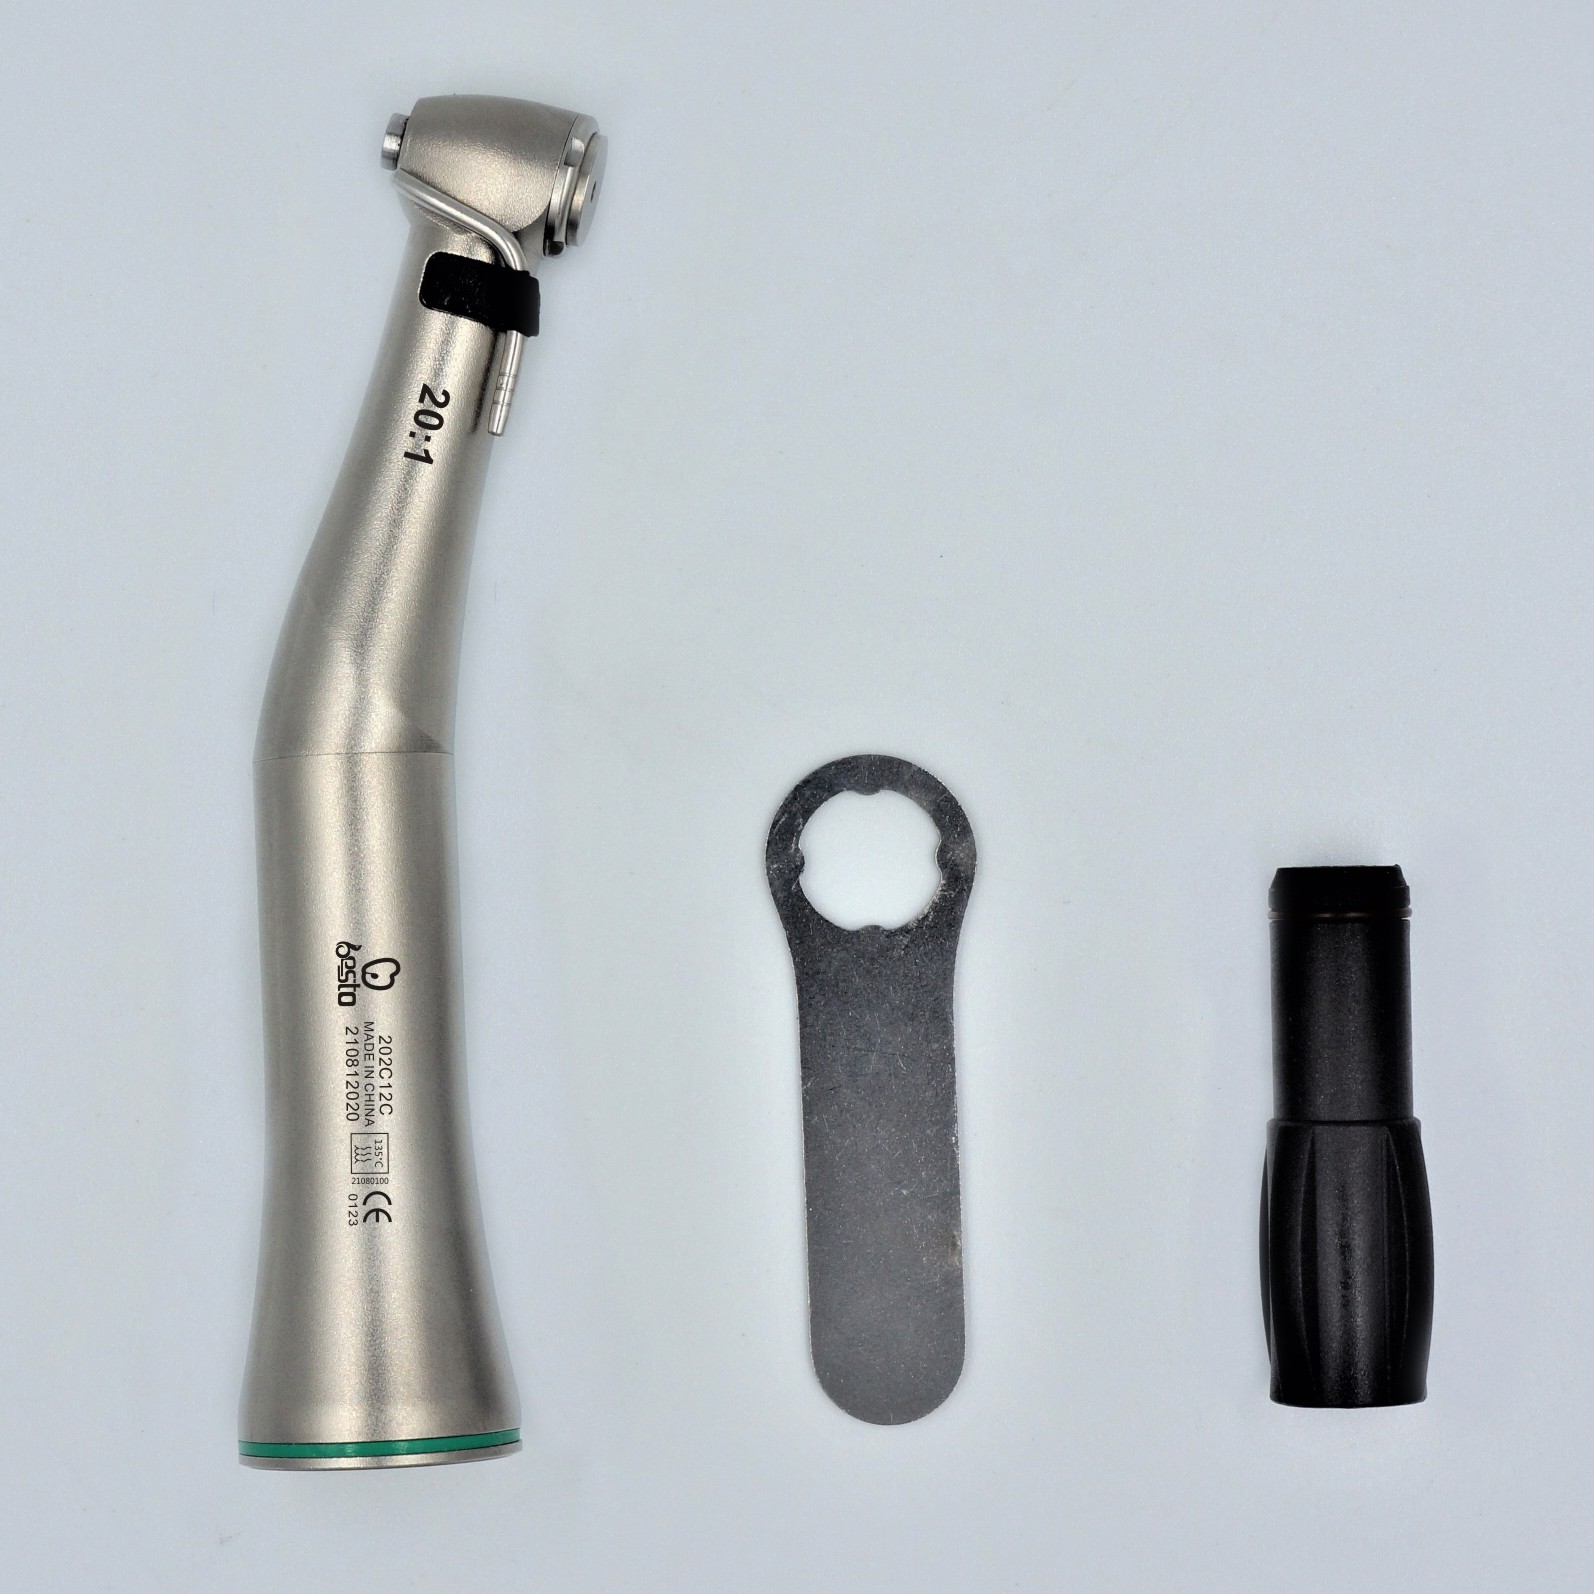 20:1 Implant contra angle high quality dental handpiece 202C12C